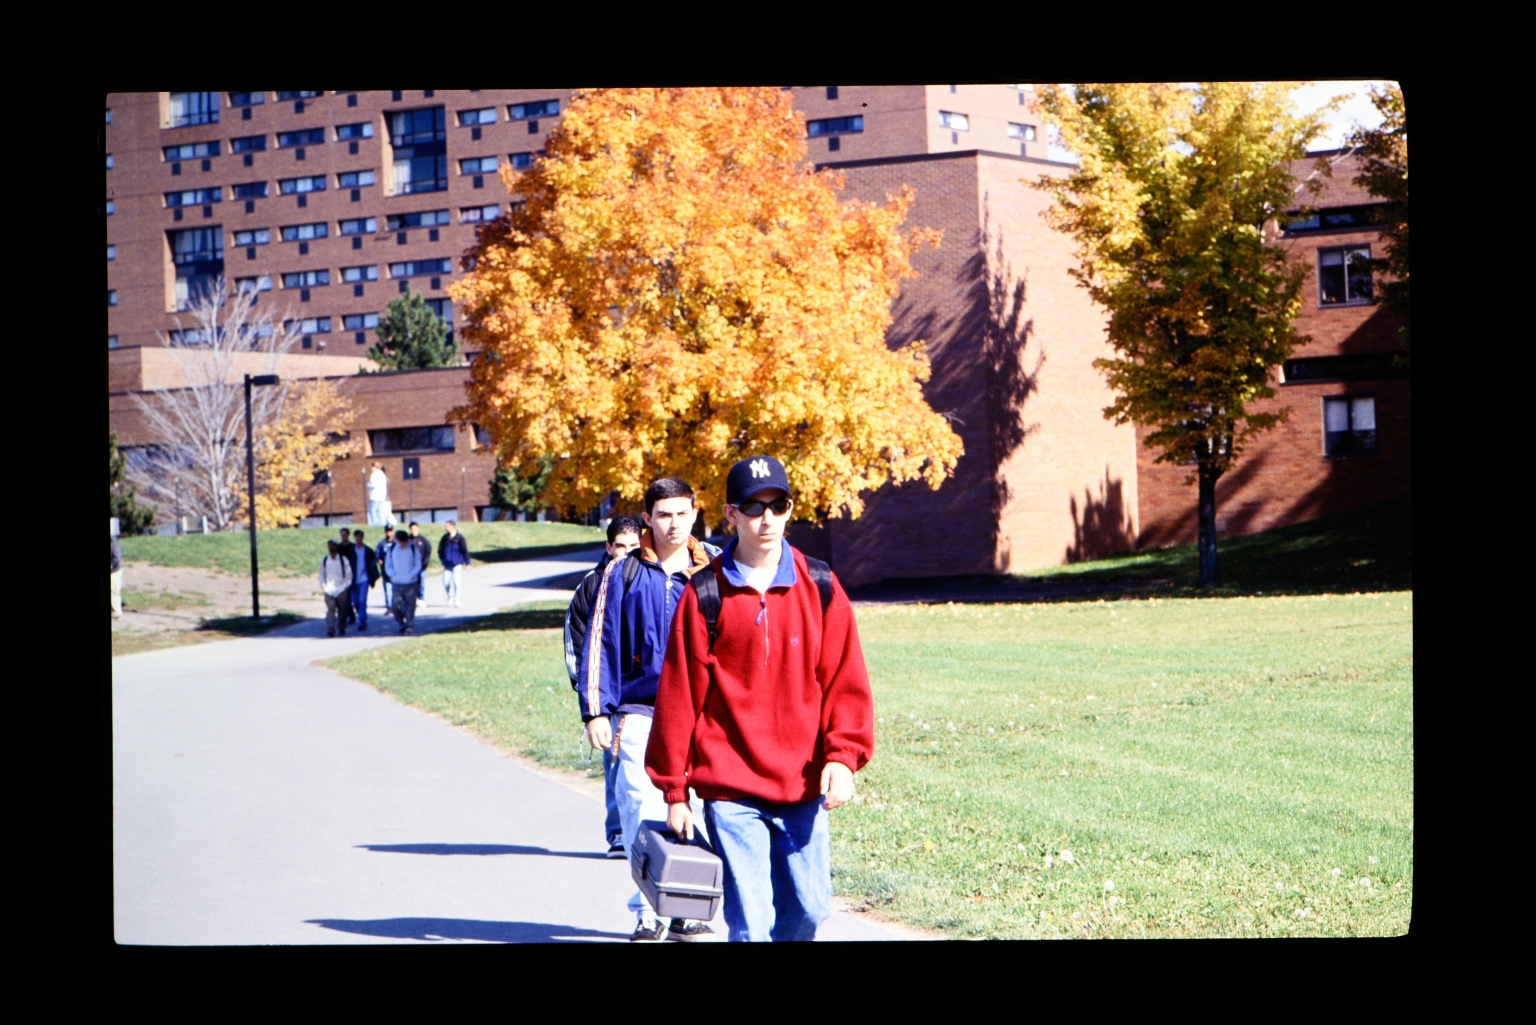 Walking across campus